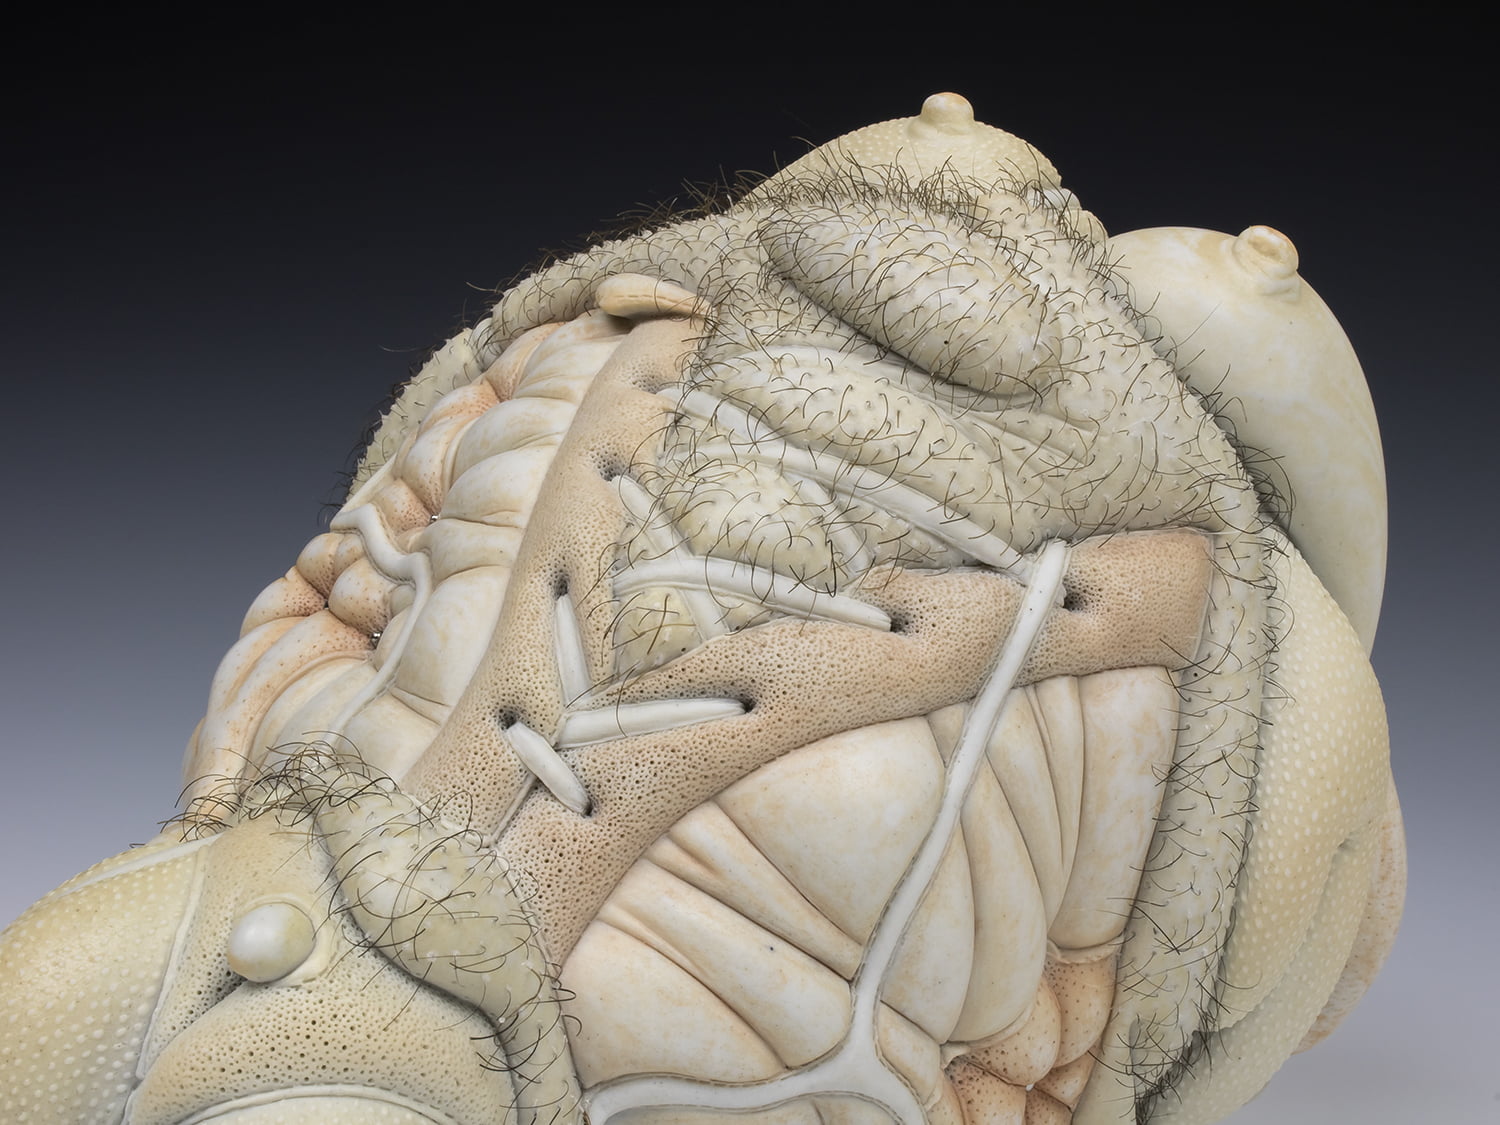 Jason Briggs "Paris" (detail 1). porcelain, hair, and mixed media sculpture ceramics.